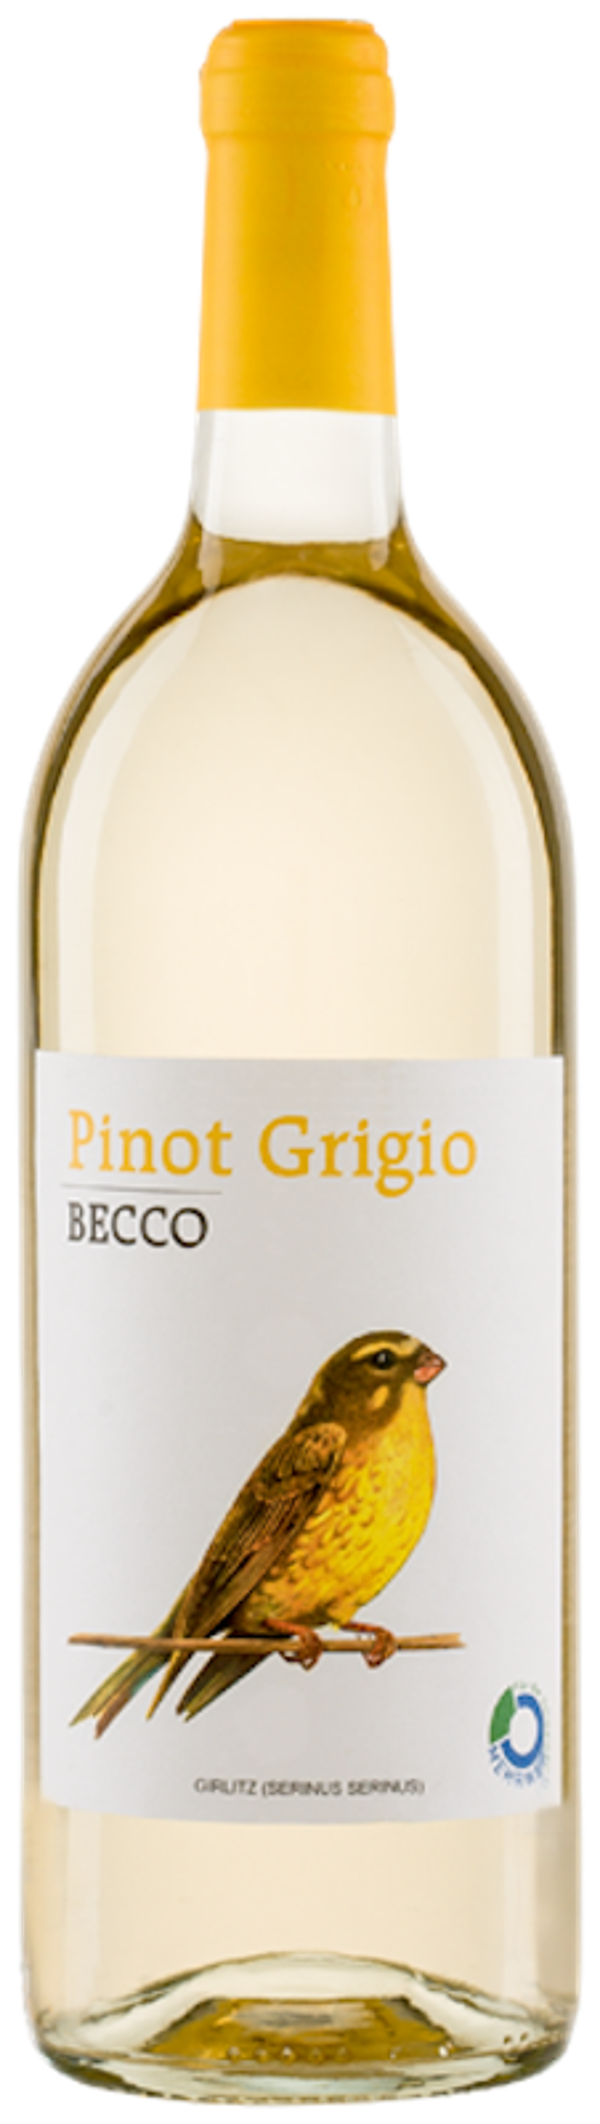 Produktfoto zu VPE Pinot Grigio Becco 6x1l Riegel Bioweine